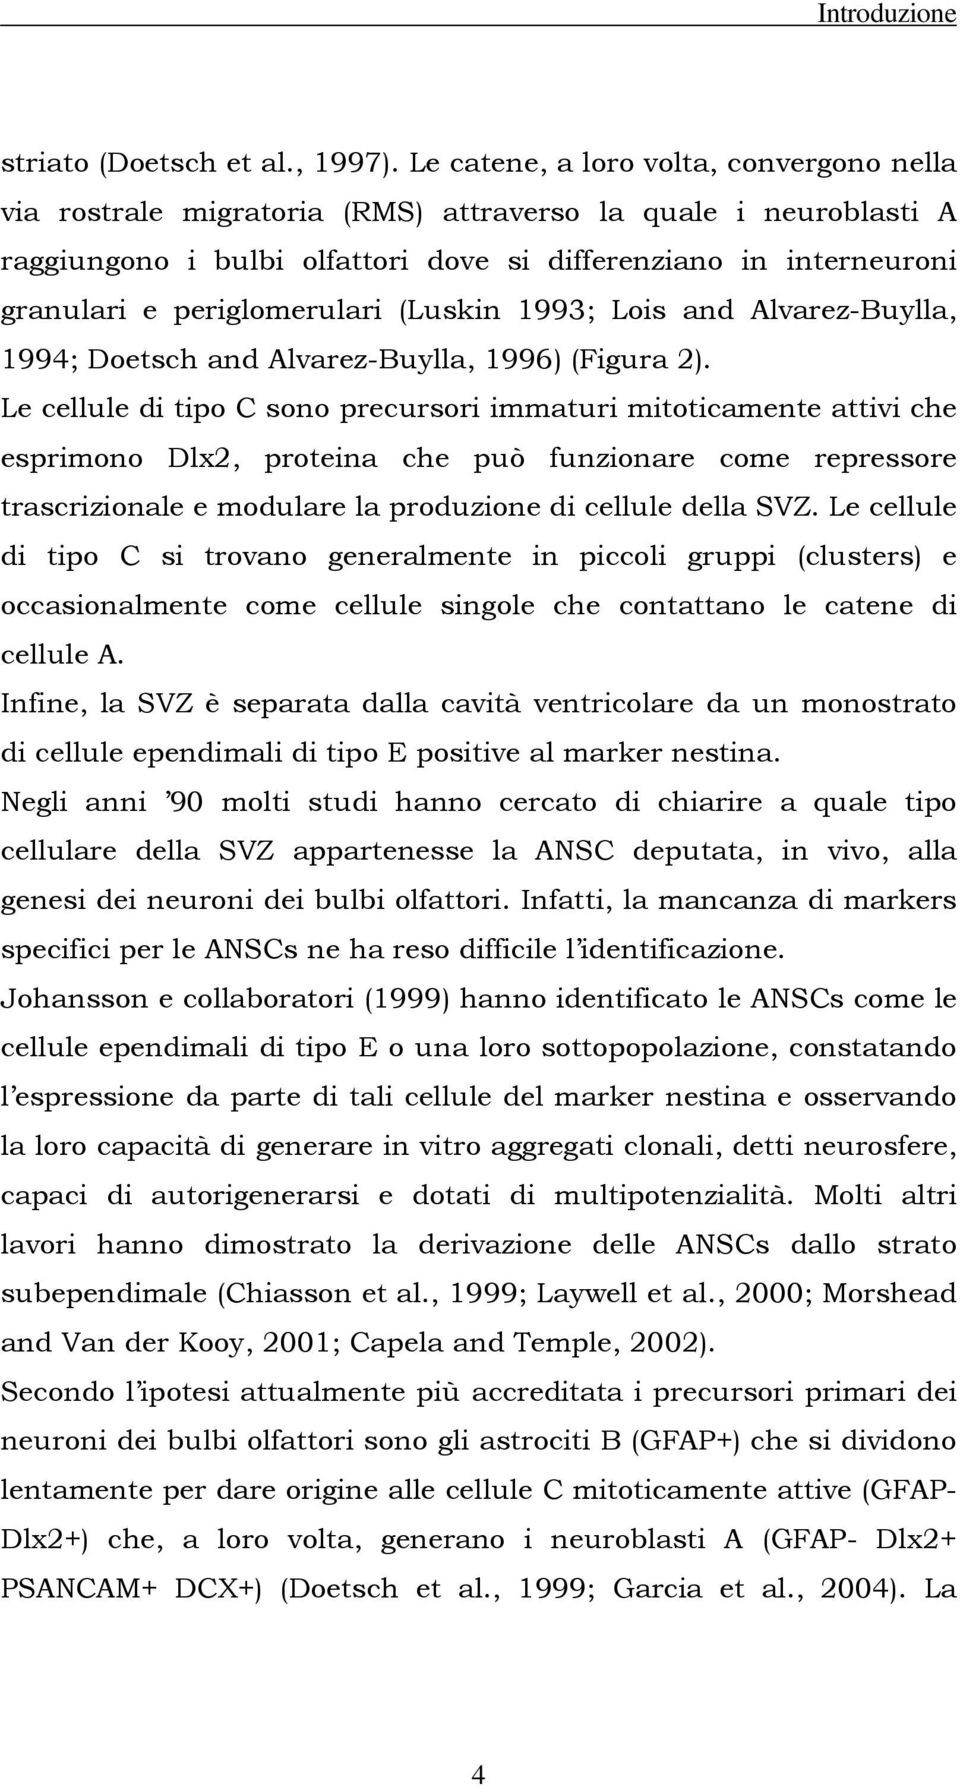 periglomerulari (Luskin 1993; Lois and Alvarez-Buylla, 1994; Doetsch and Alvarez-Buylla, 1996) (Figura 2).